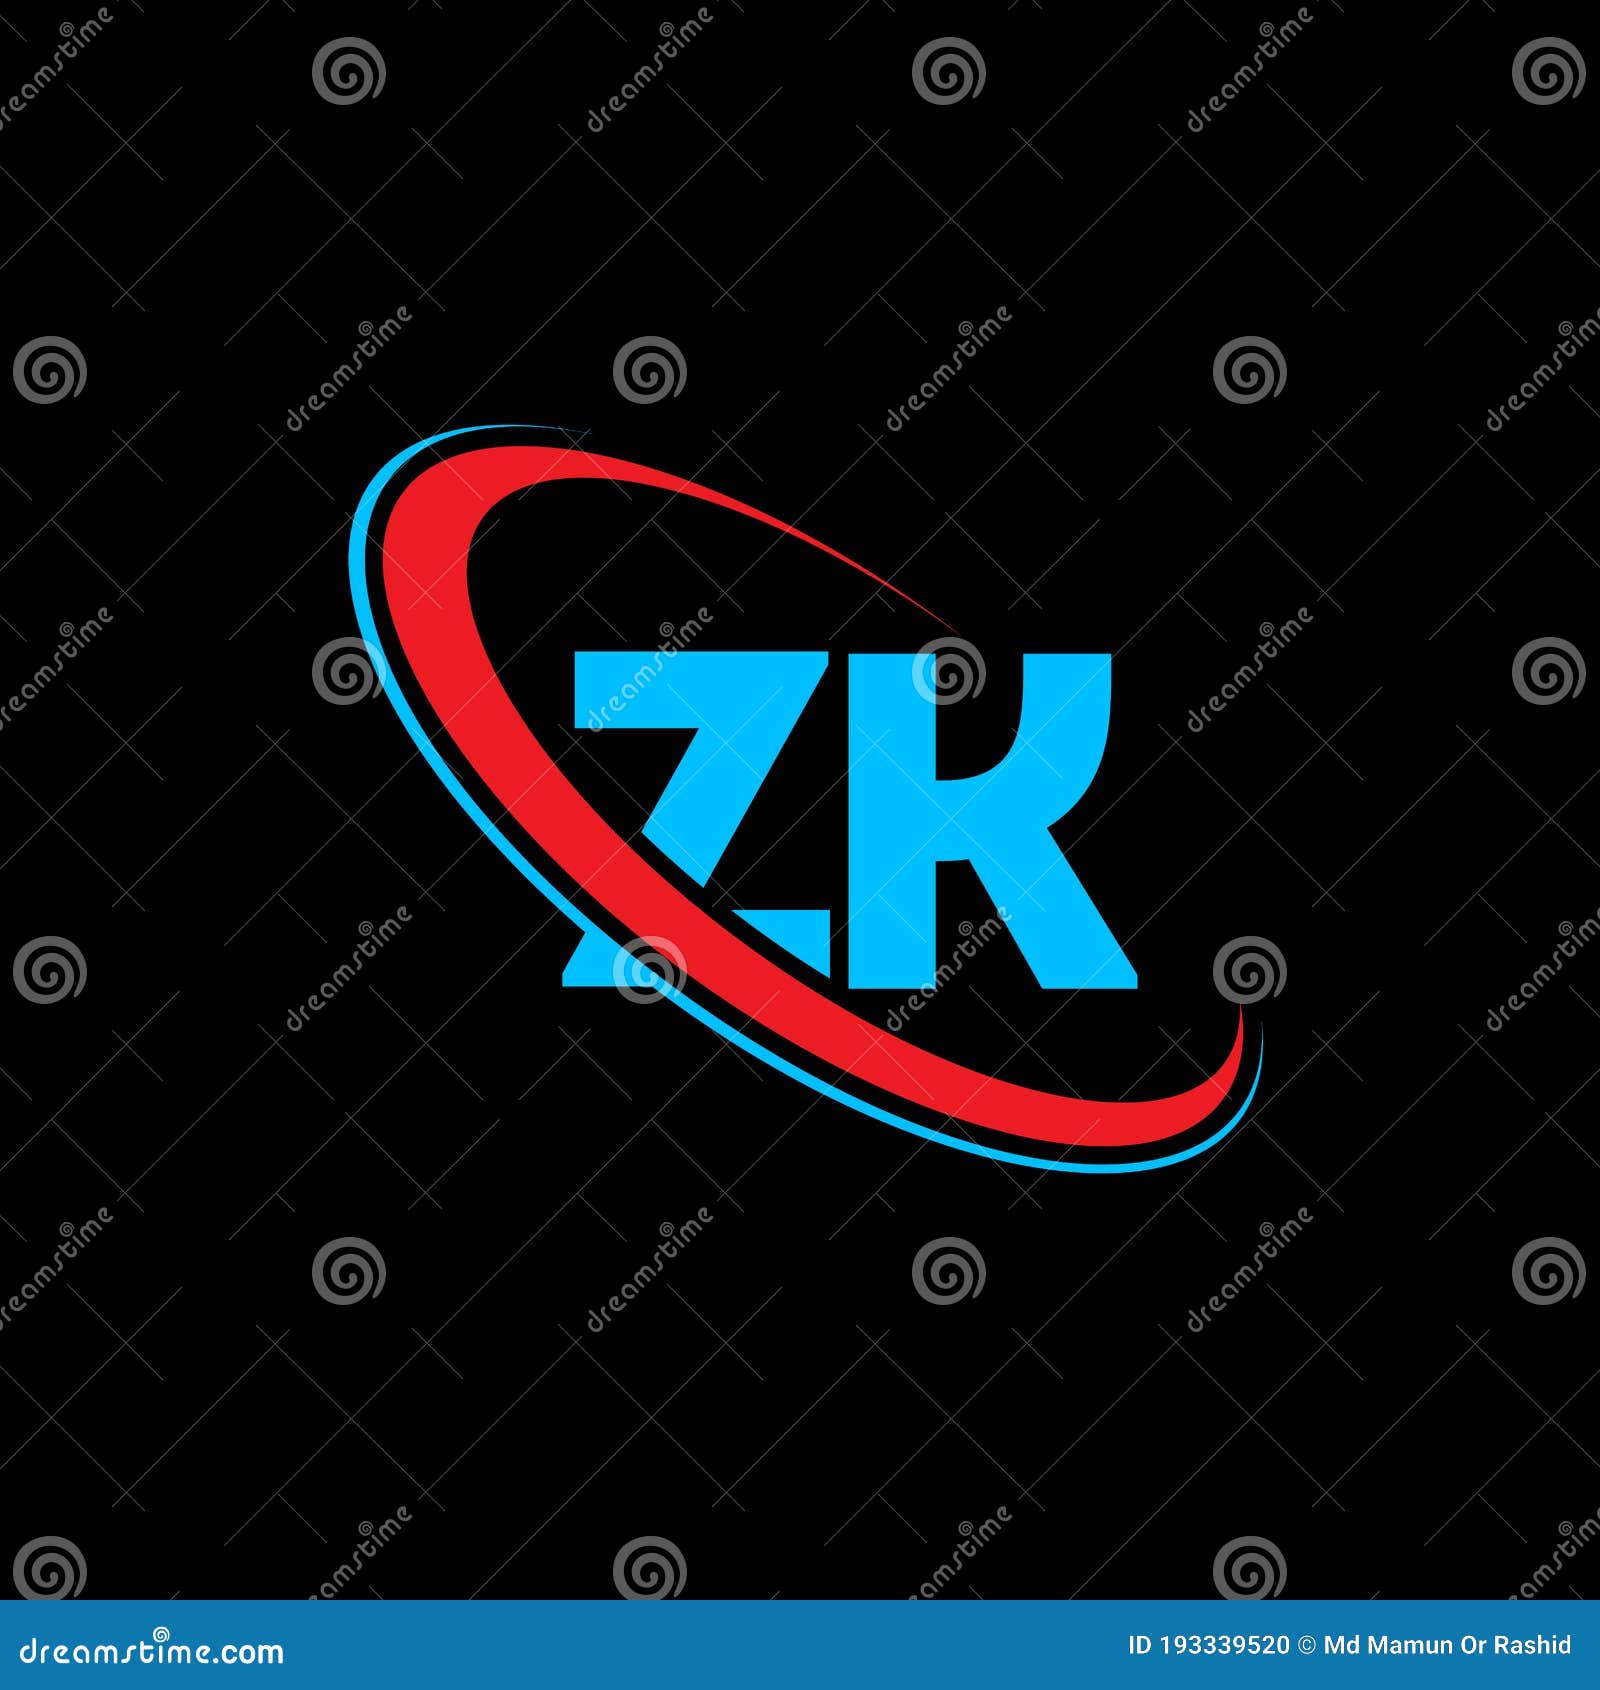 Zk Z K Letter Logo Design Initial Letter Zk Linked Circle Uppercase Monogram Logo Red And Blue